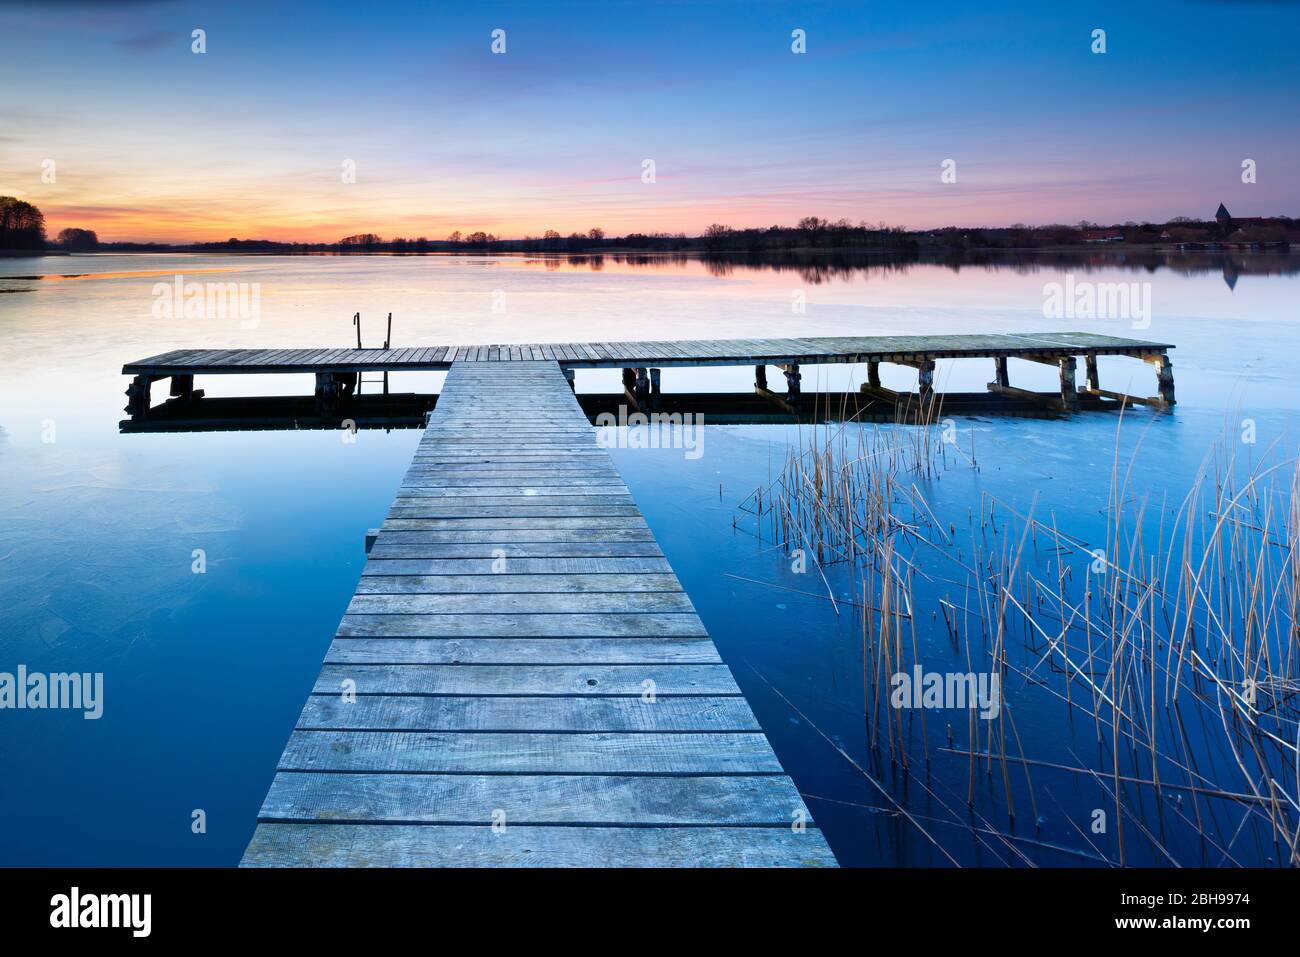 Sunset at the Krakower lake in winter, boardwalk, ice on the water, Mecklenburg-Vorpommern, Germany Stock Photo